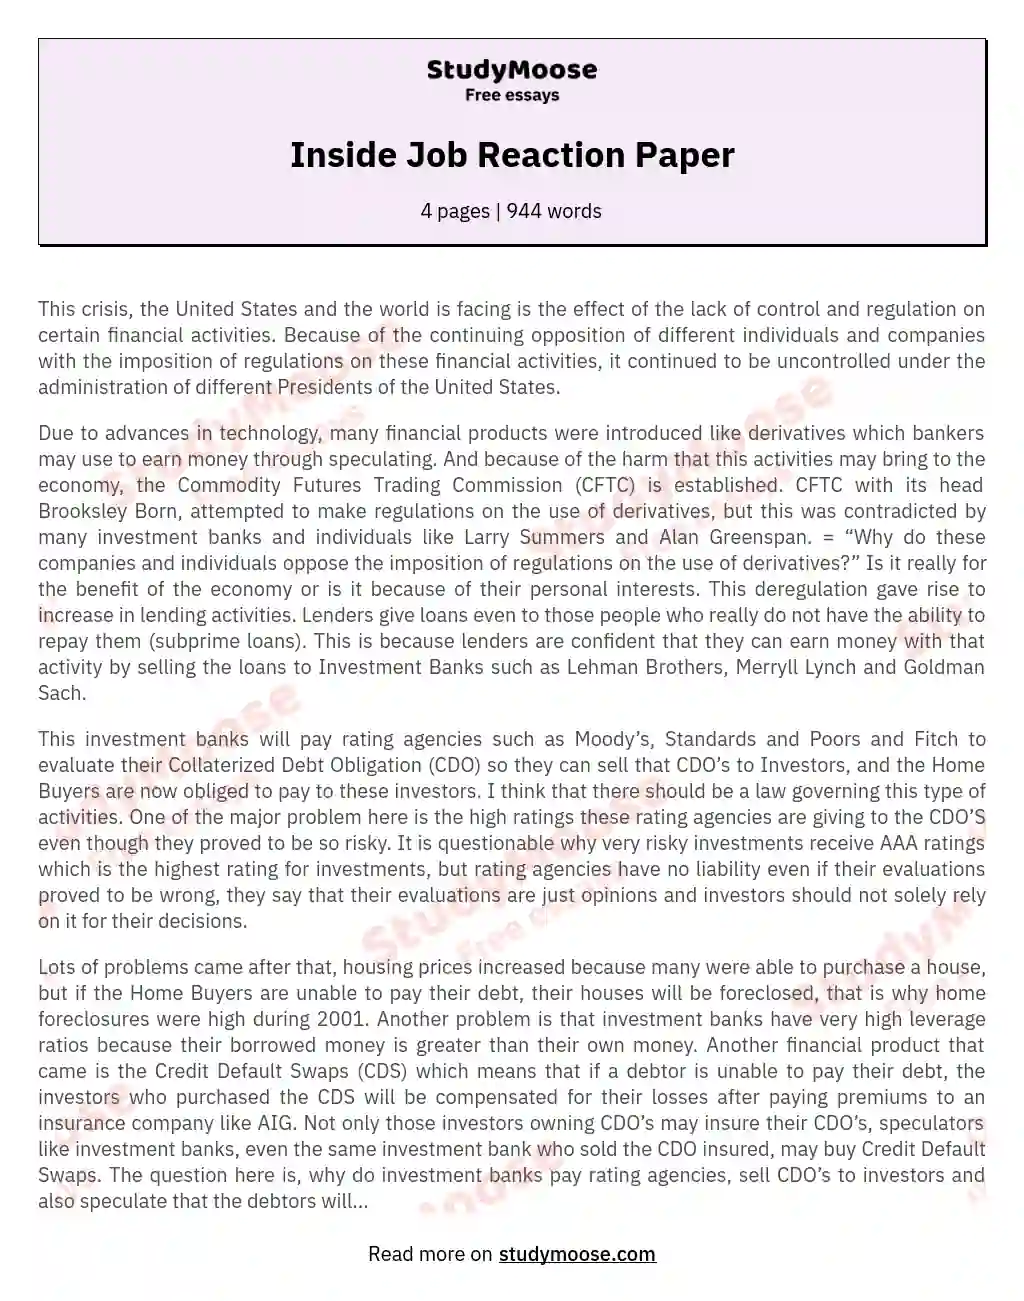 Inside Job Reaction Paper essay